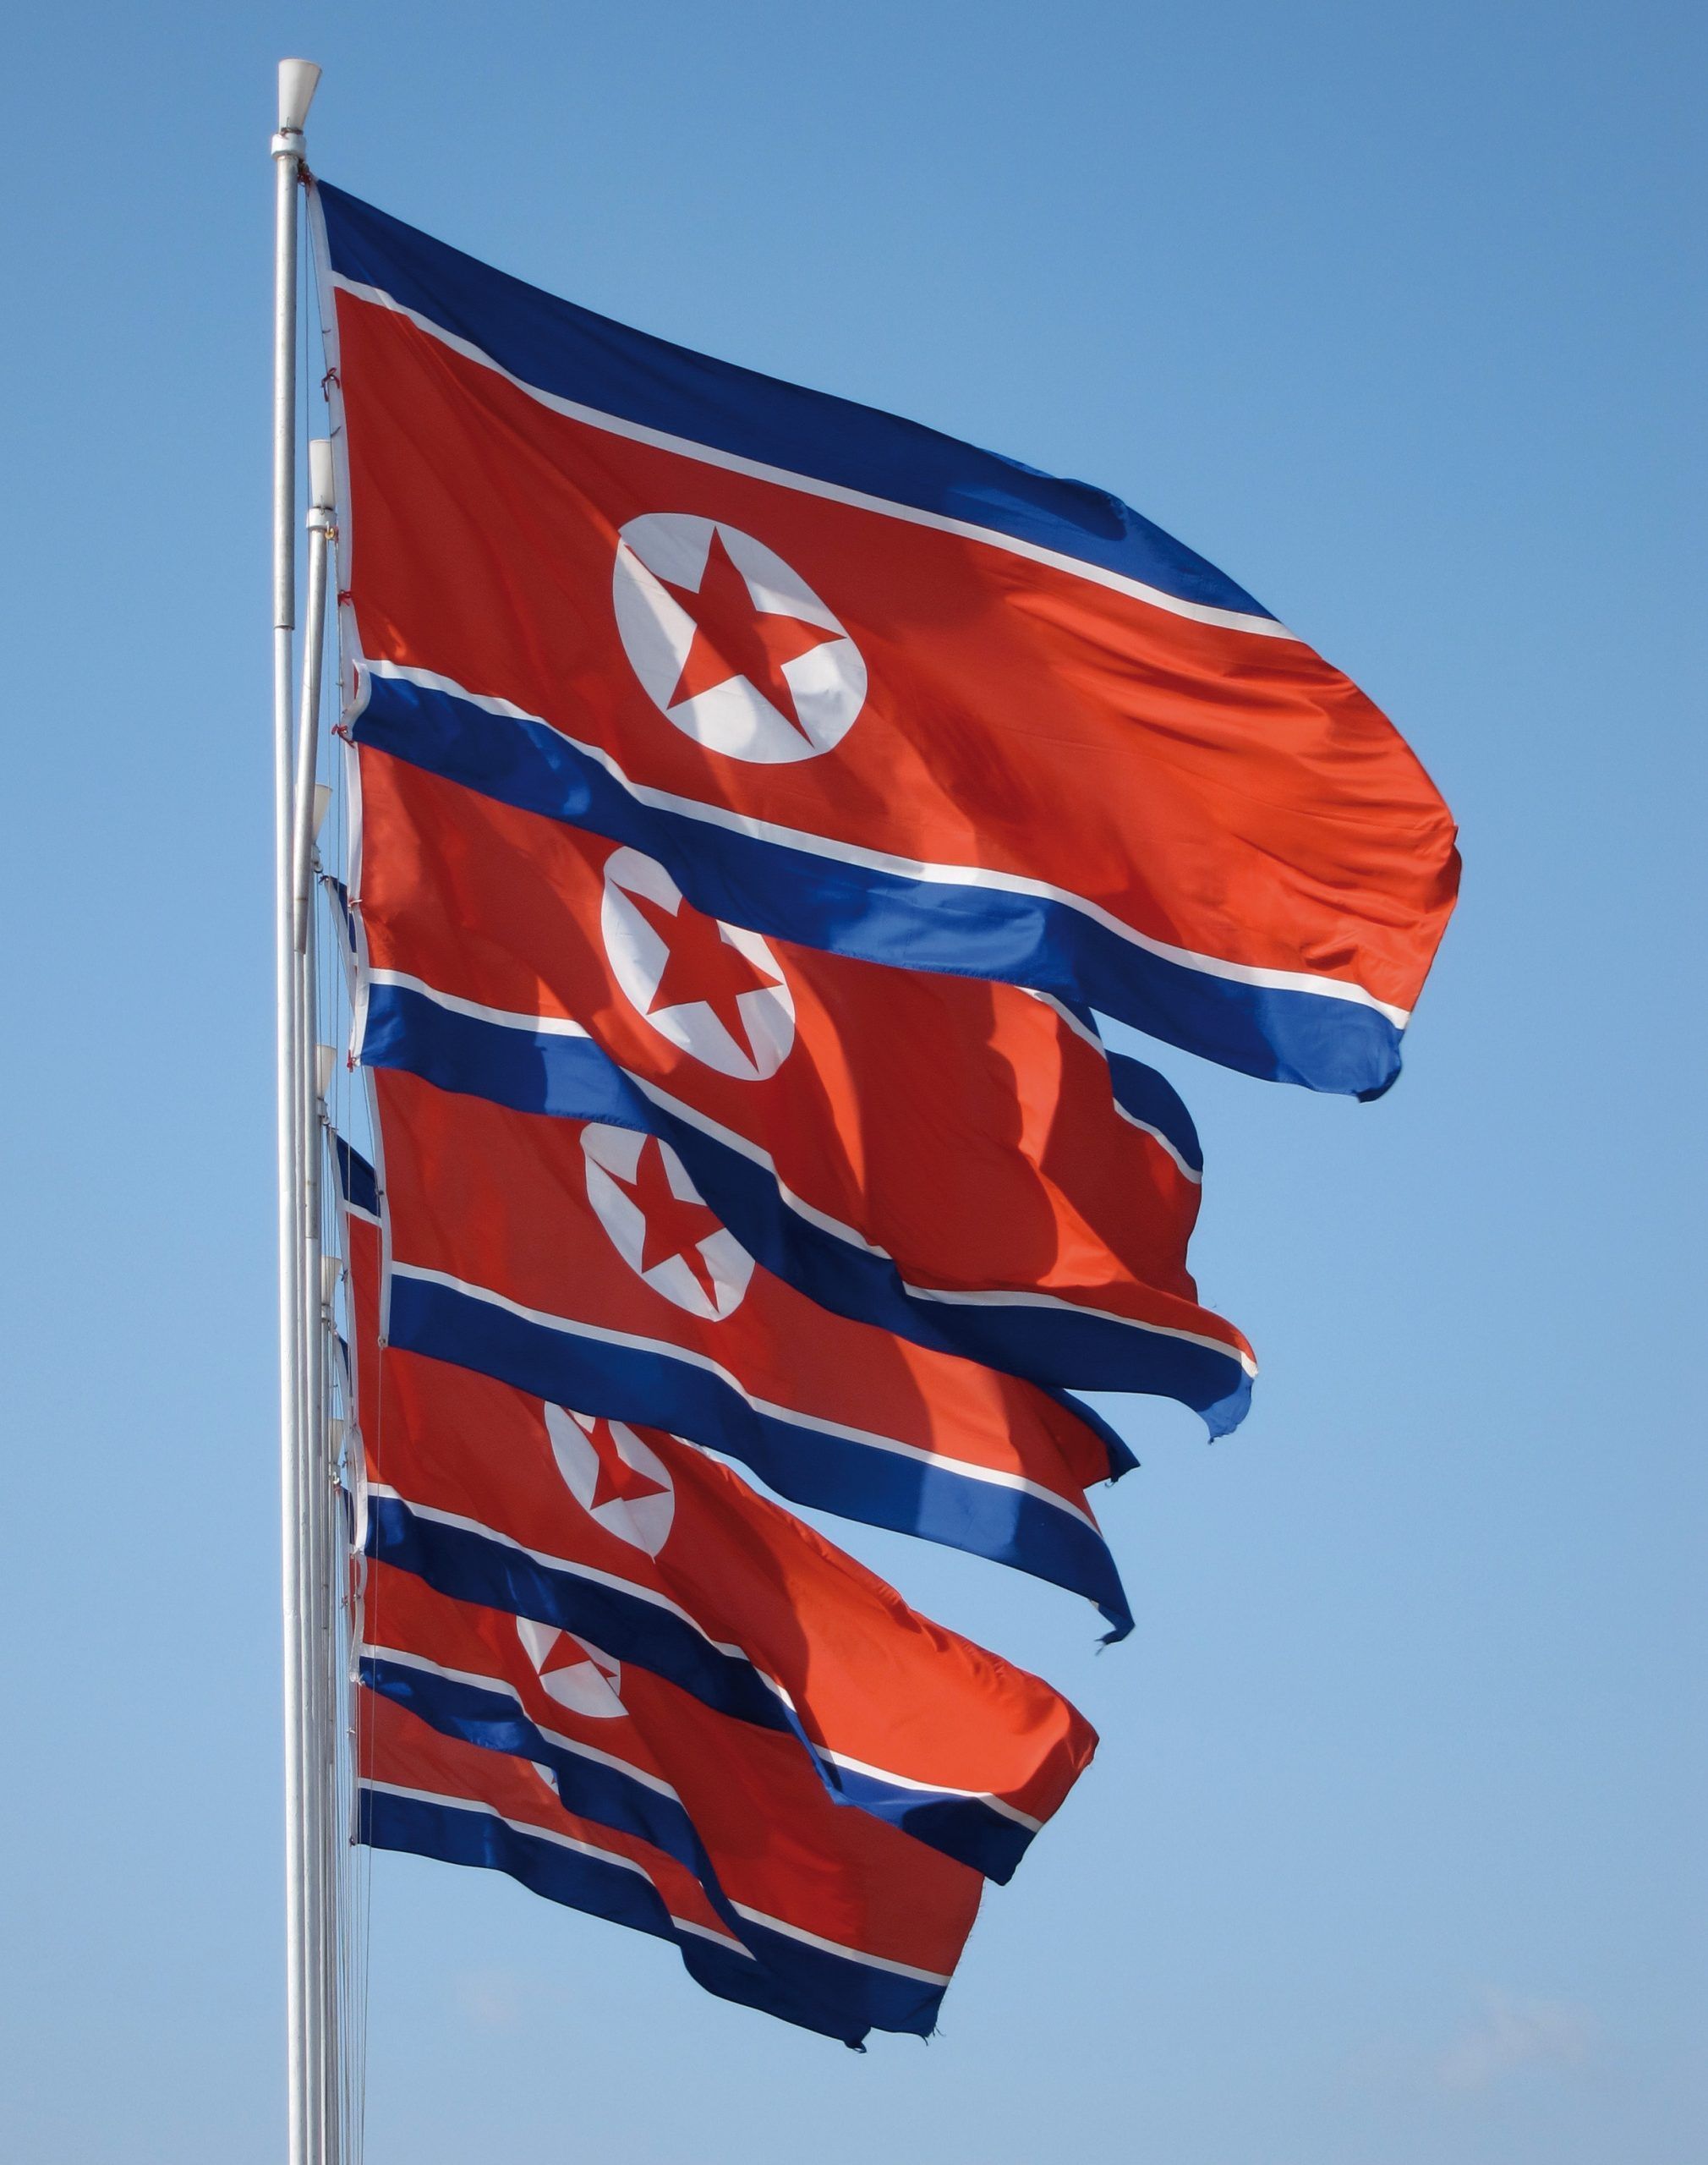 North Korea flags (picture - Wikicommons: John Pavelka)